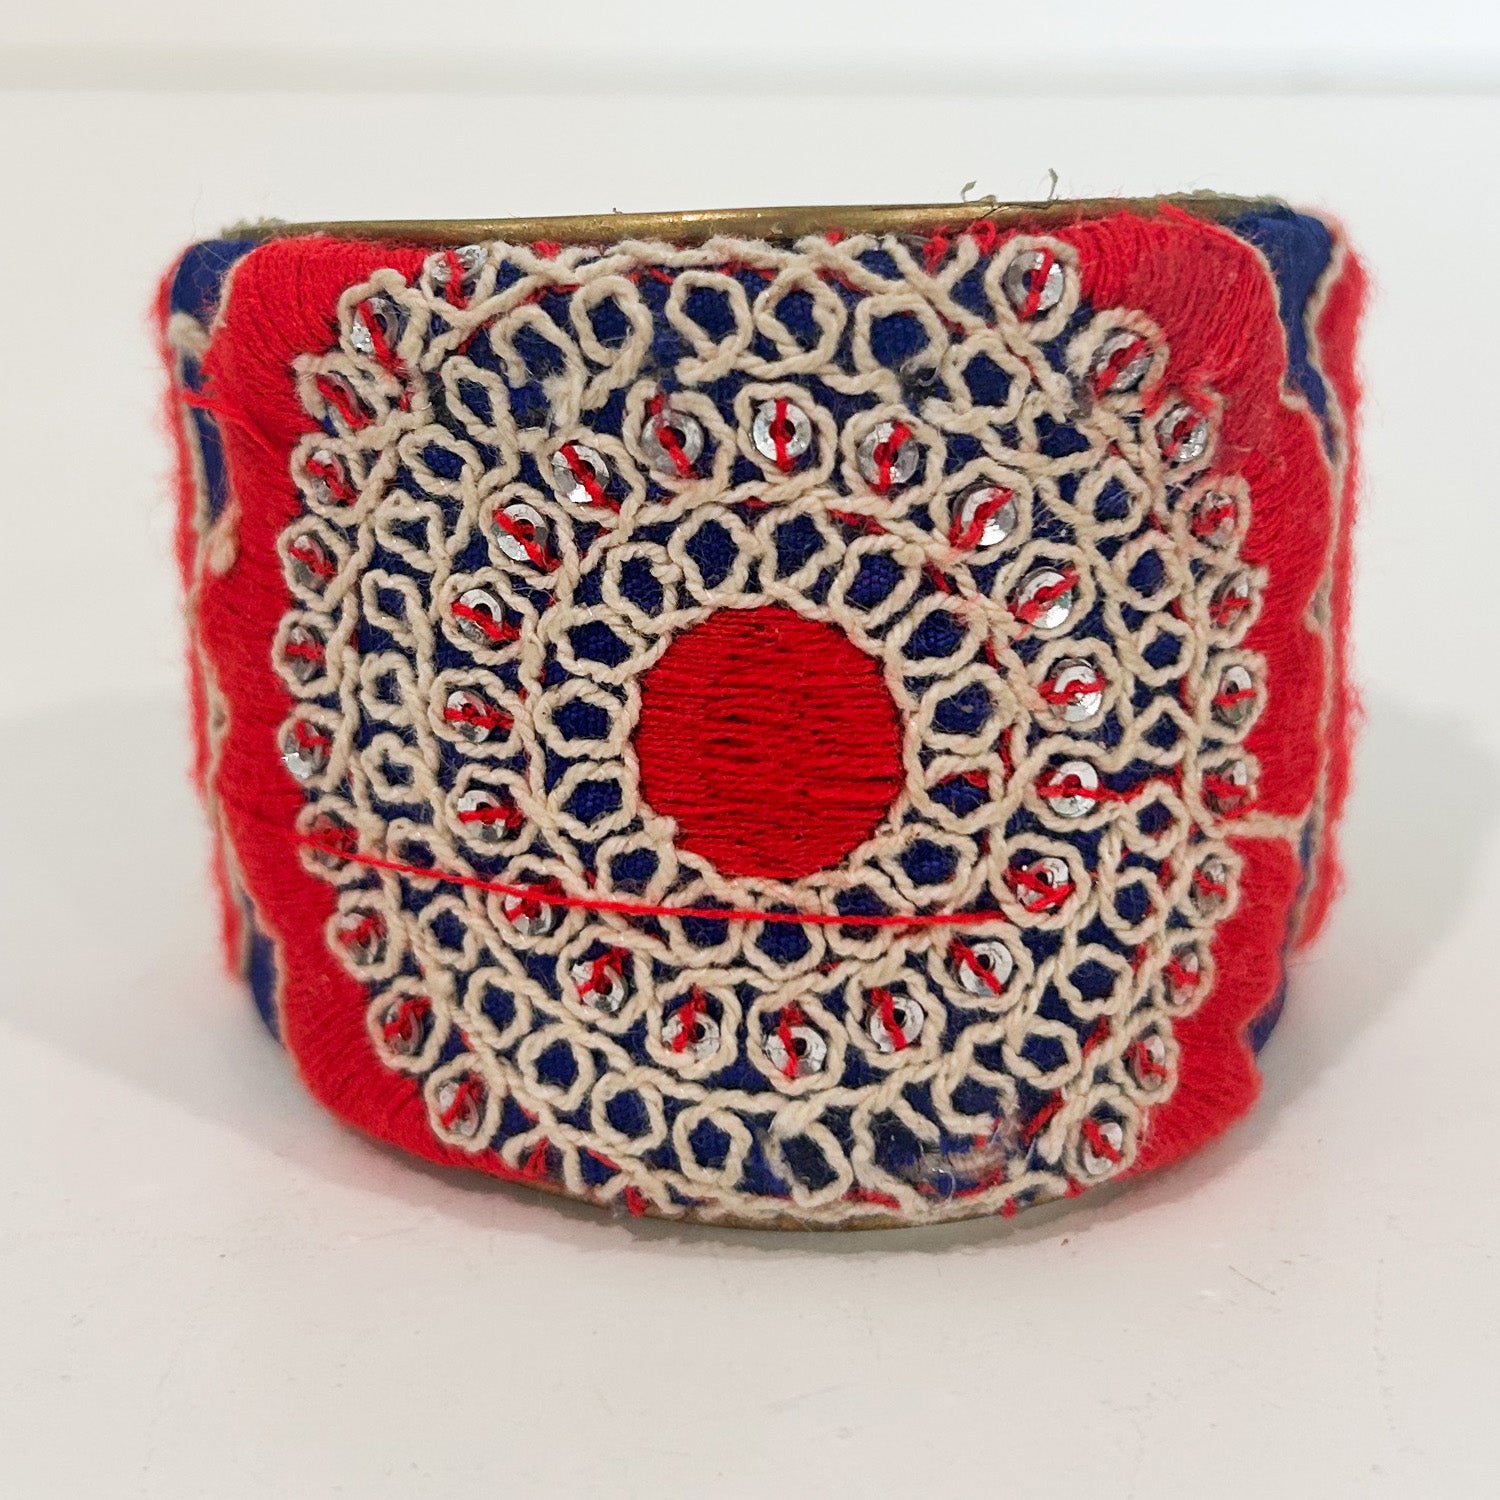 Belle - Handmade Red & Blue Vintage Brass Cuff Bracelet